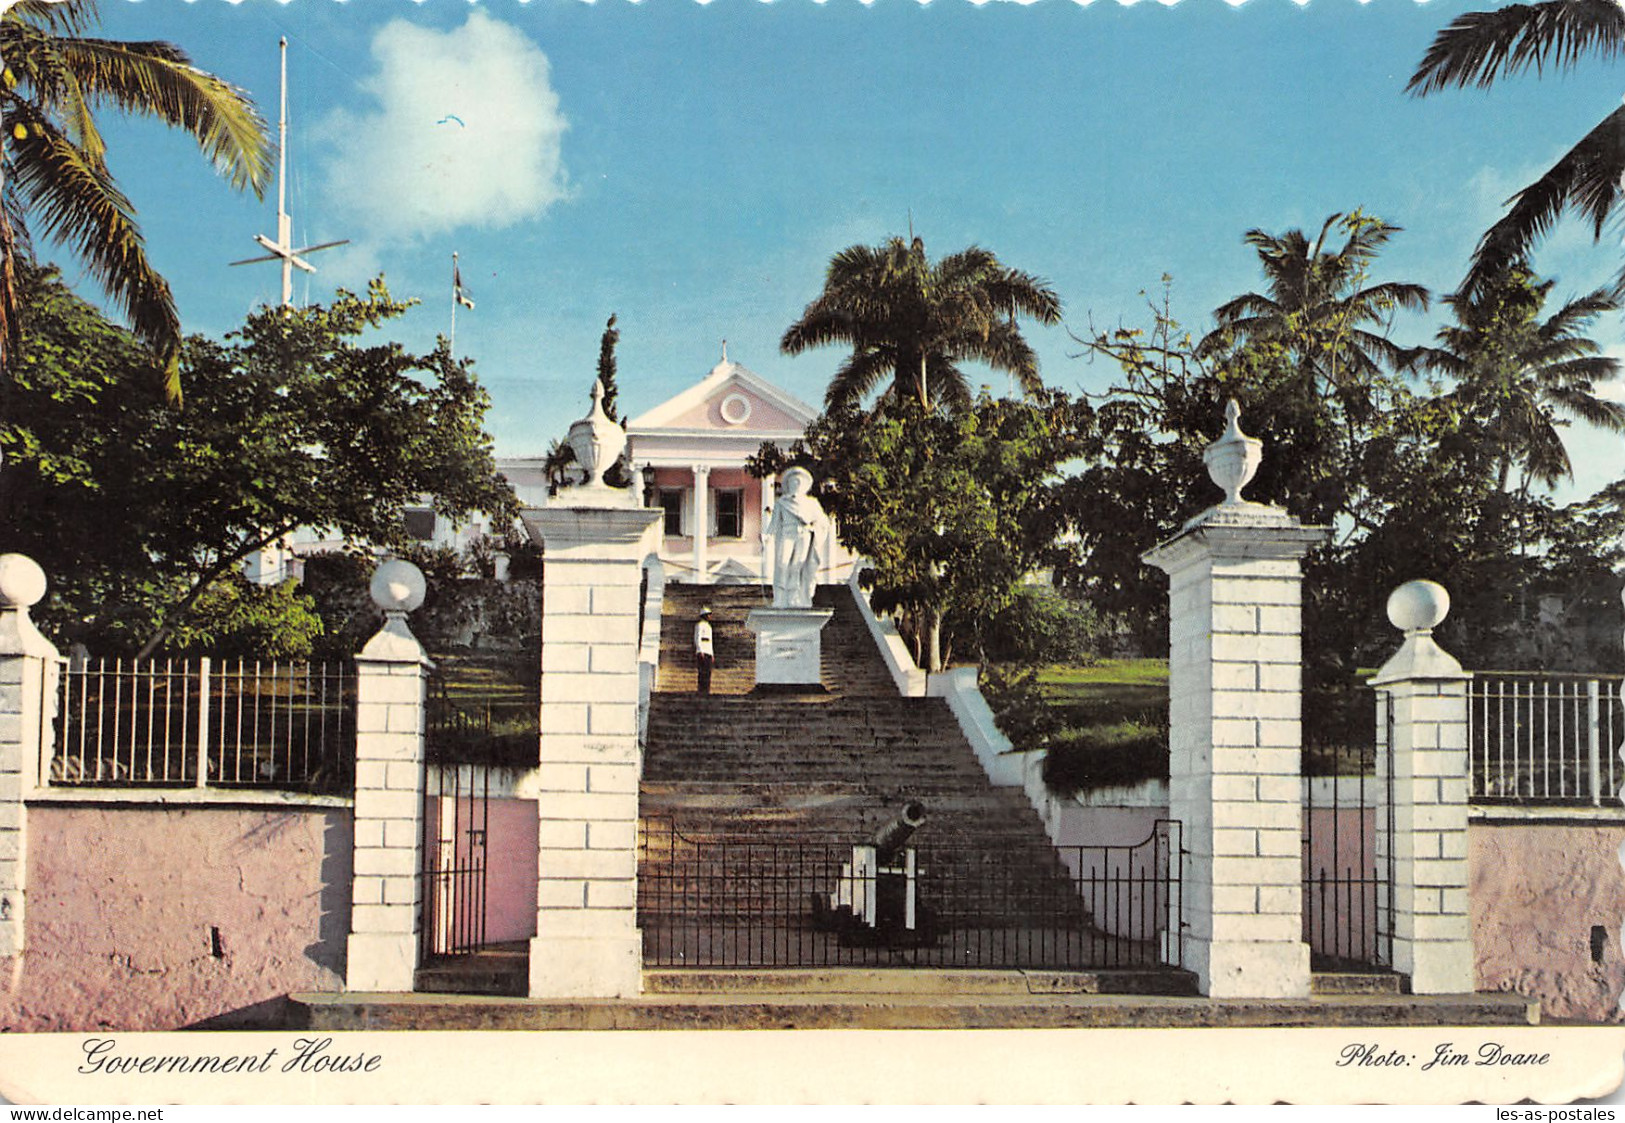 ANTILLES BAHAMAS GOVERNNENT HOUSE - Bahama's